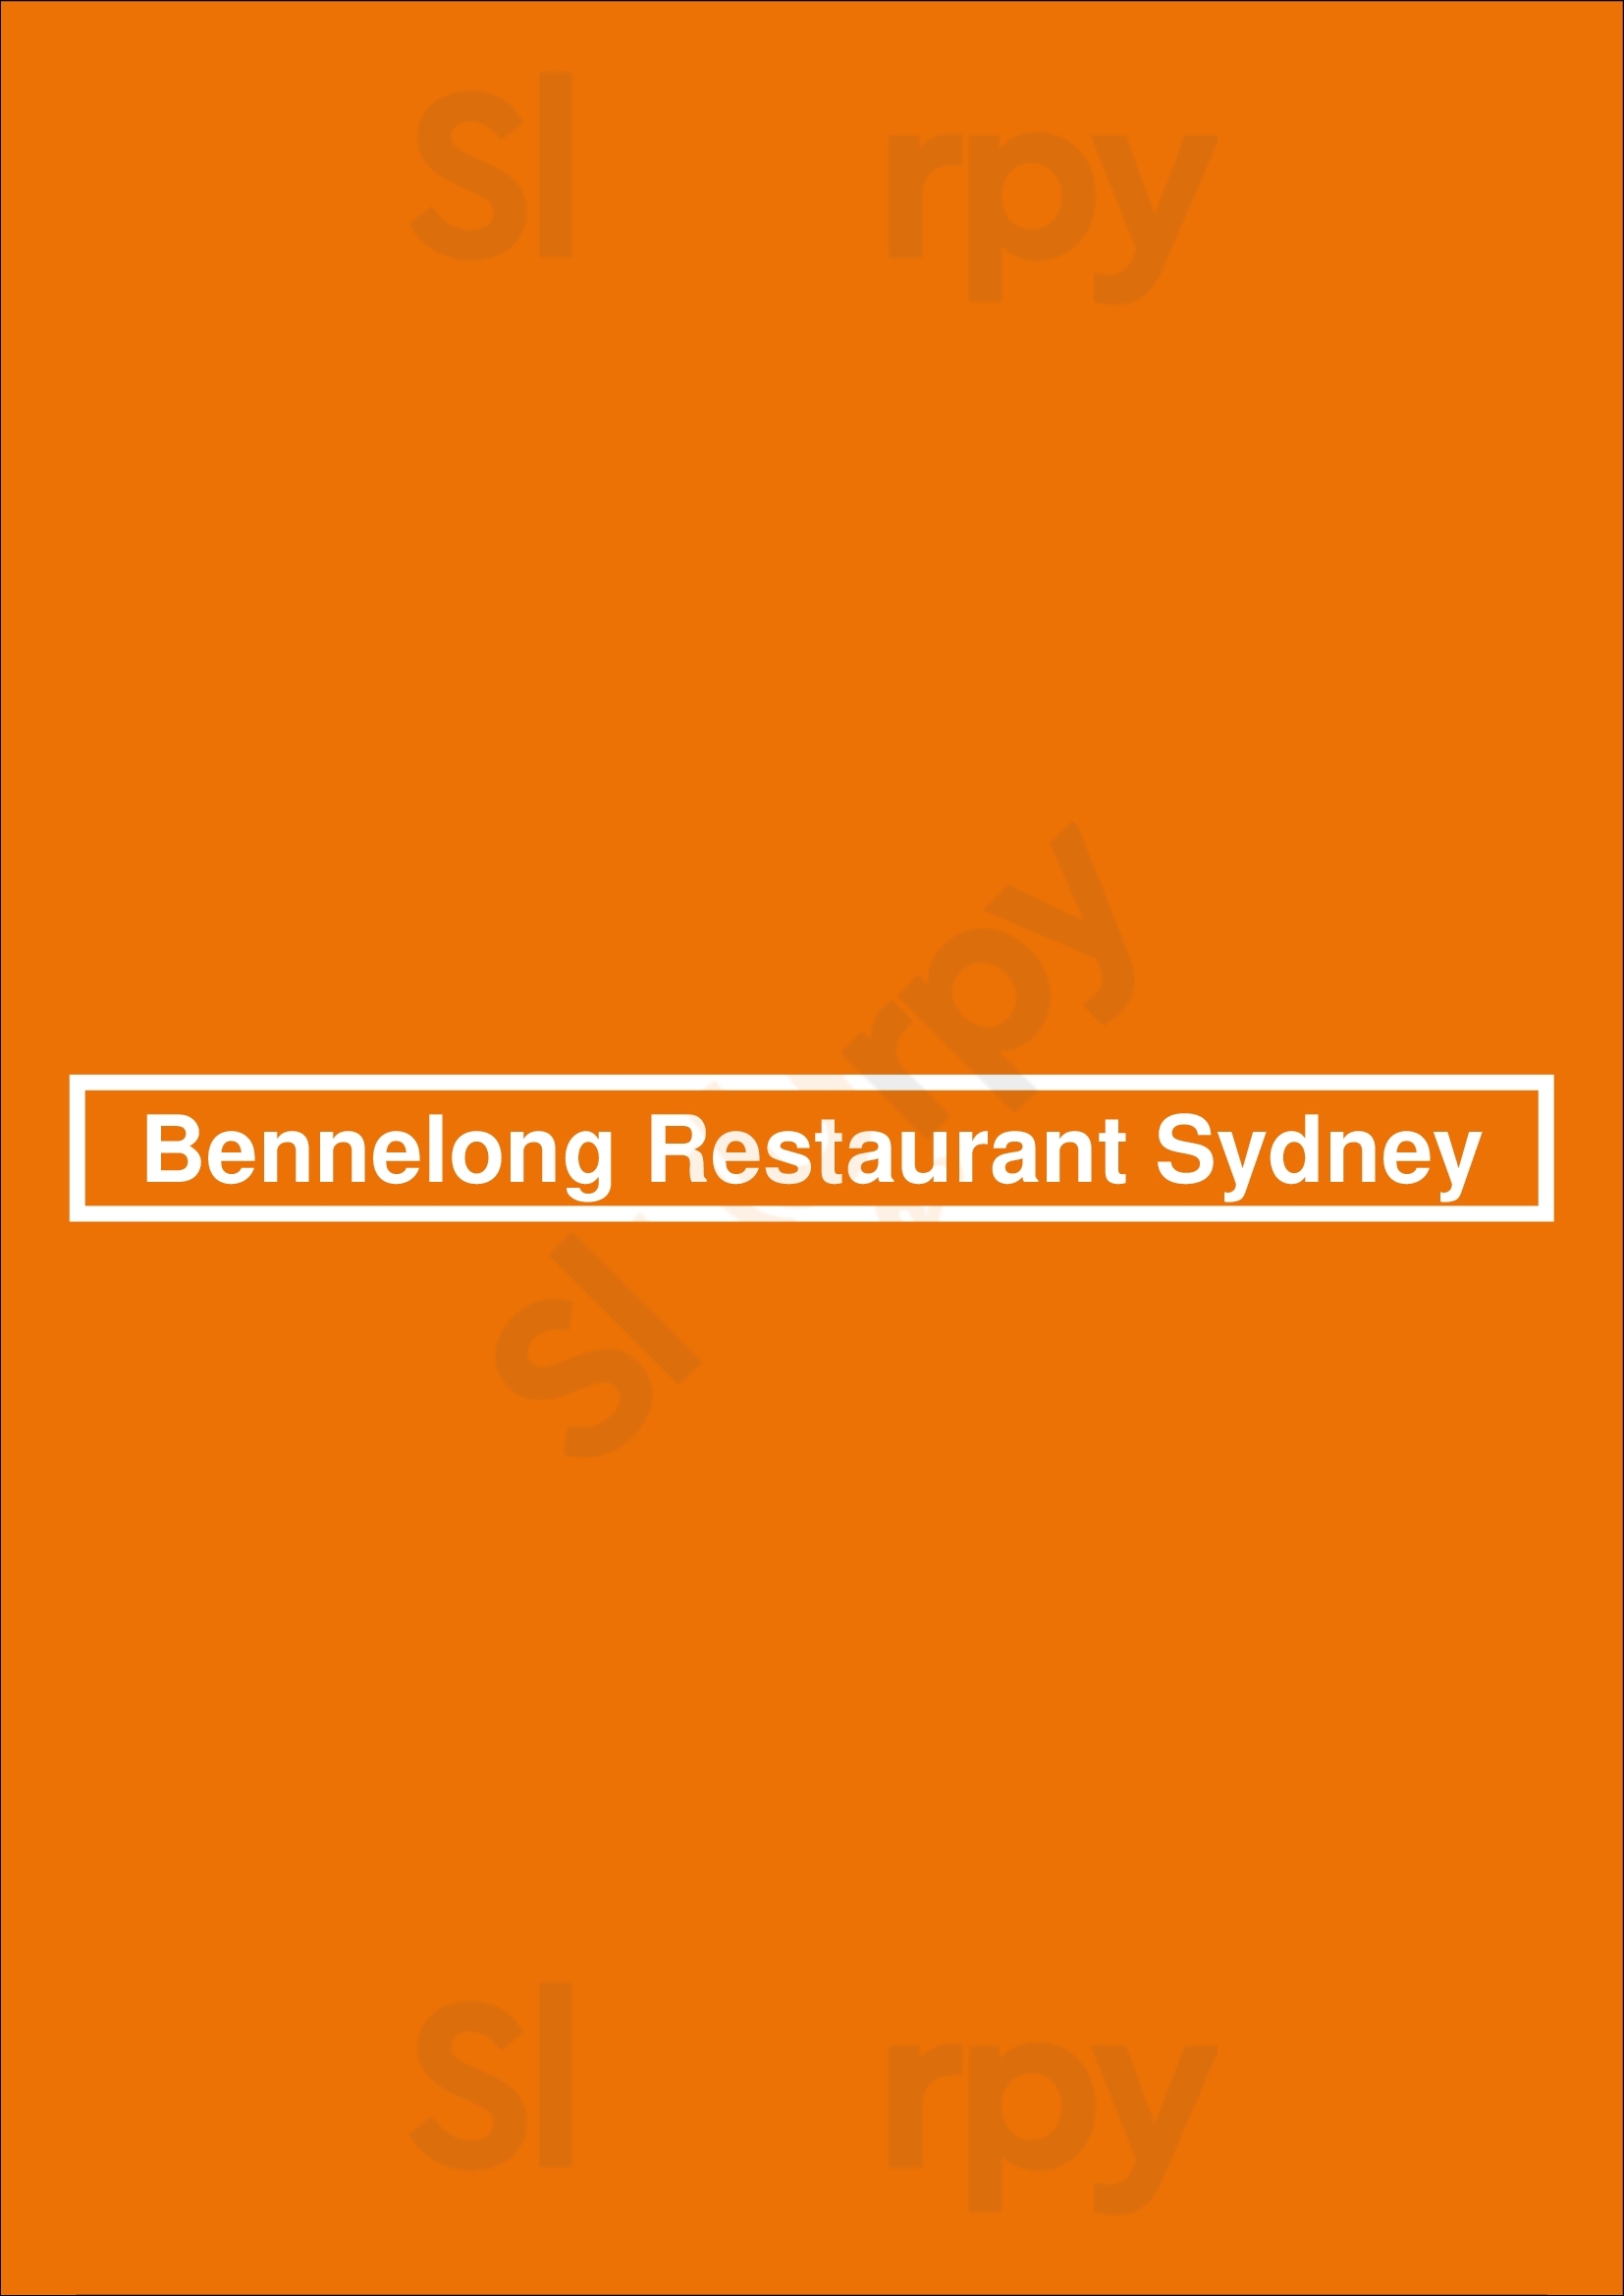 Bennelong Restaurant Sydney Sydney Menu - 1